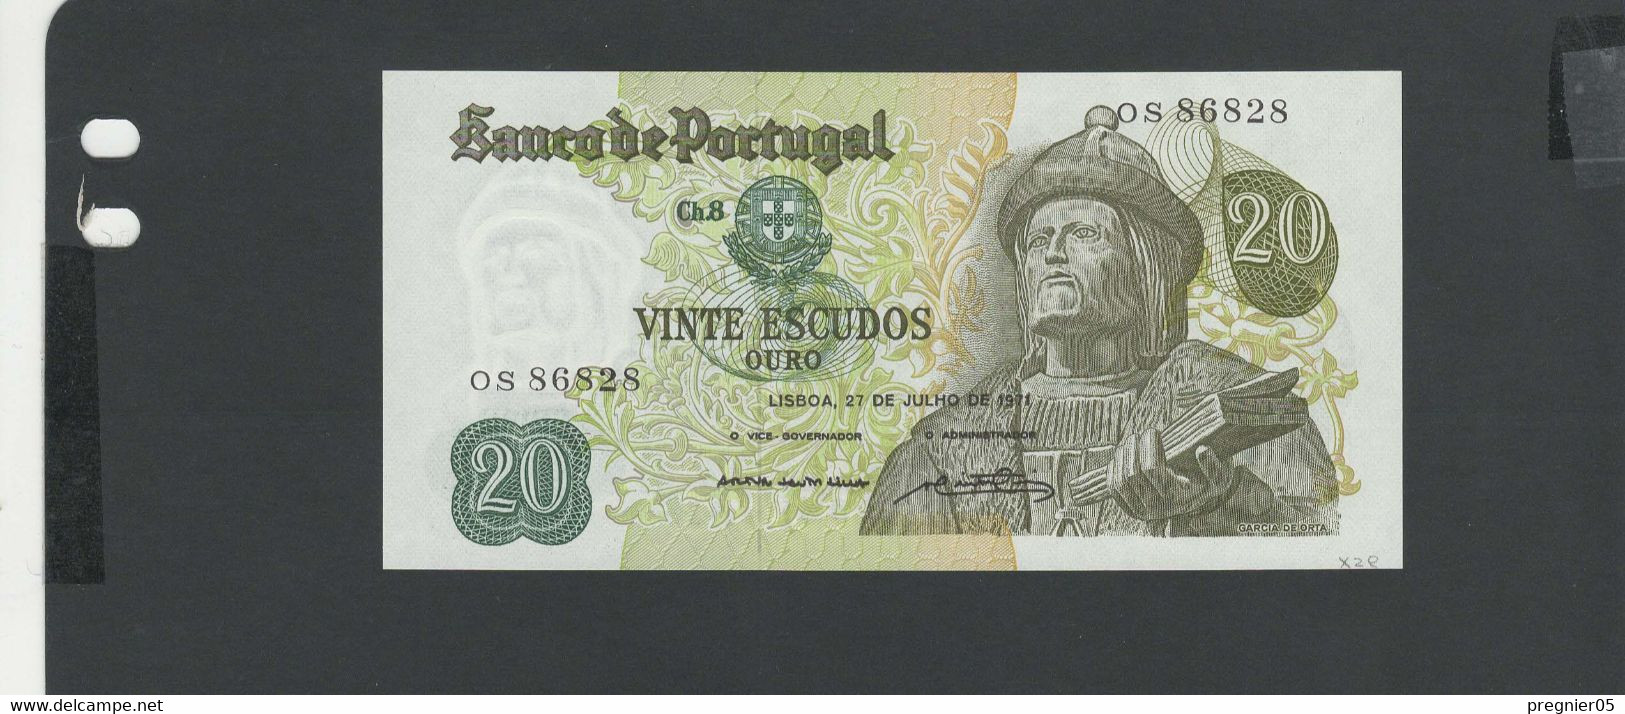 PORTUGAL - Billet 20 Escudos 1971 NEUF/UNC Pick.173 - Portugal